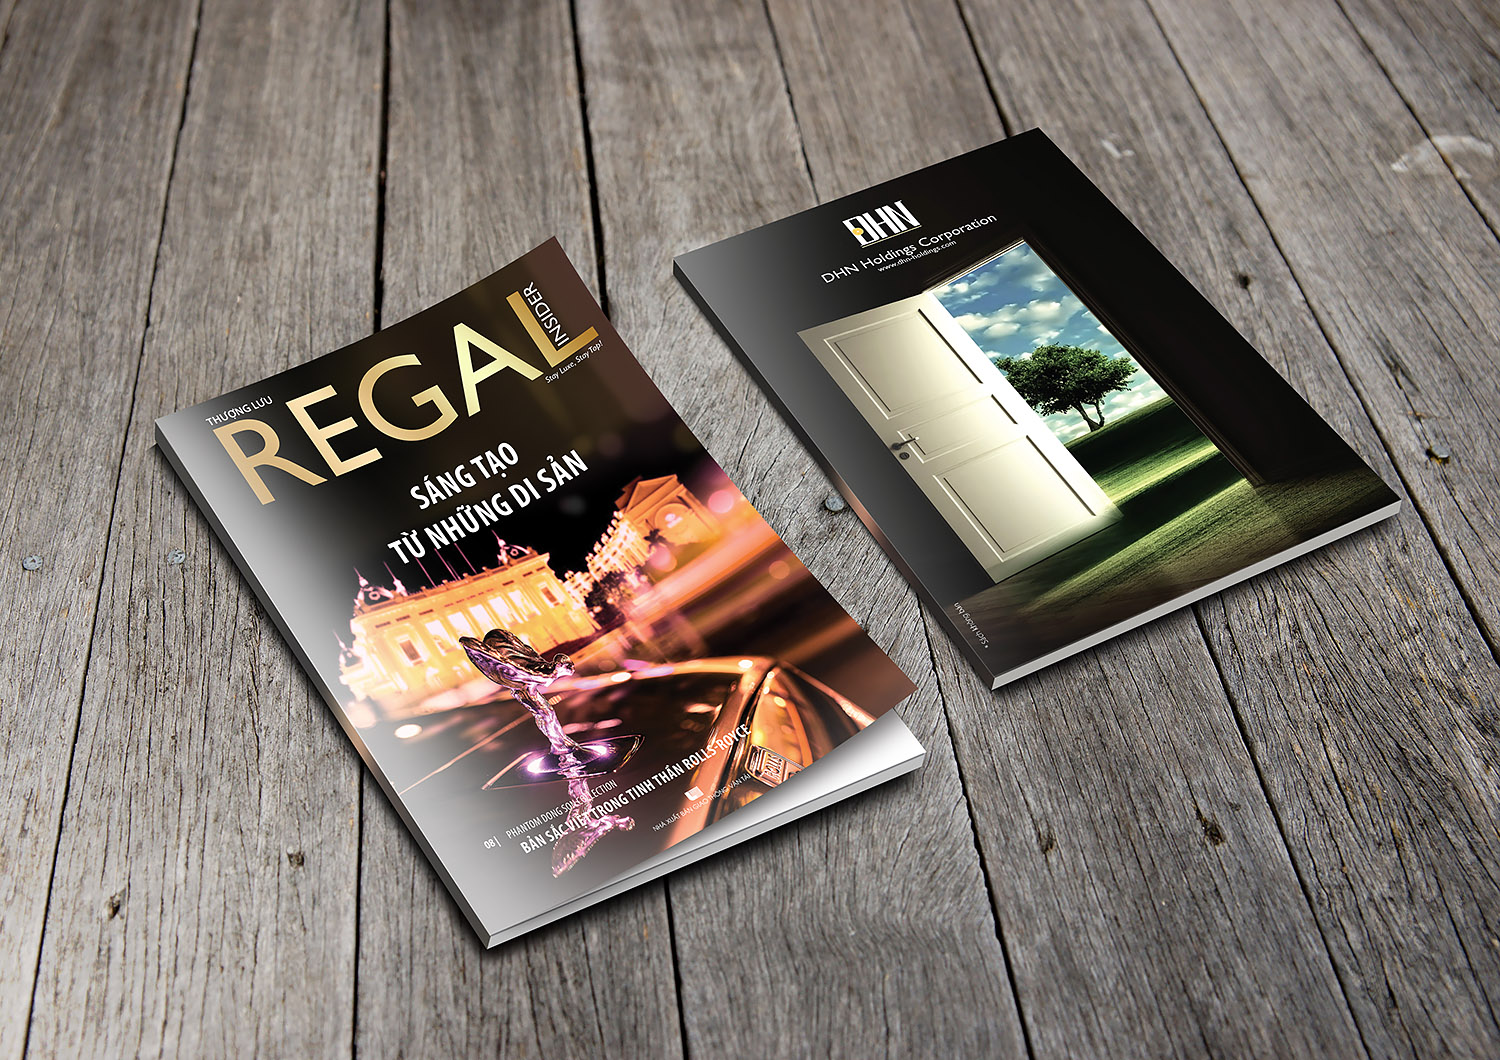 Thiết kế tạp chí Regal Insider số 4 - Vietbrands